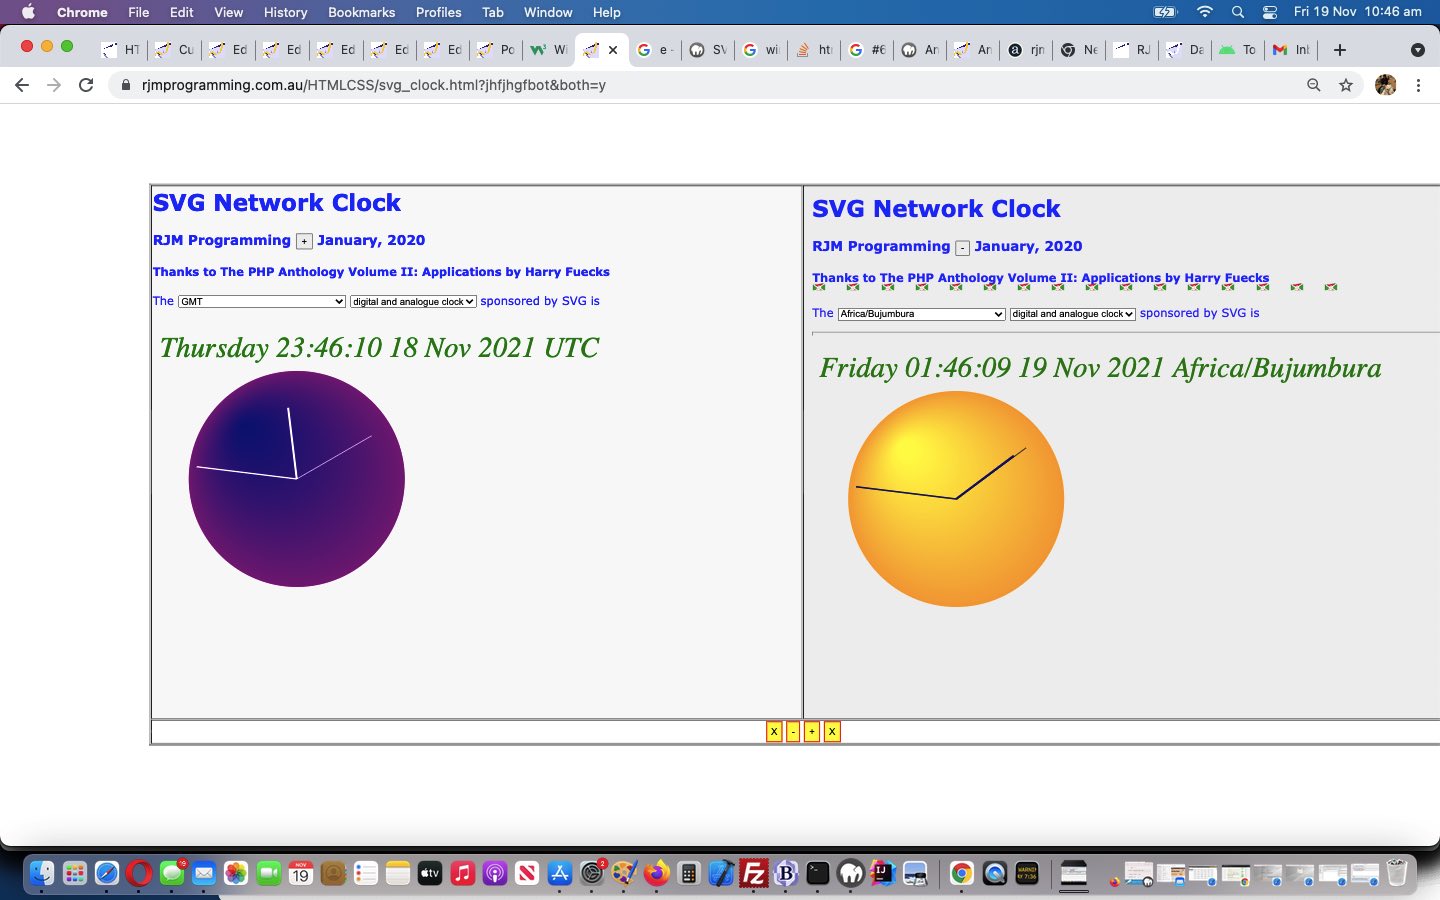 SVG Network Digital and Analogue Clocks Tutorial